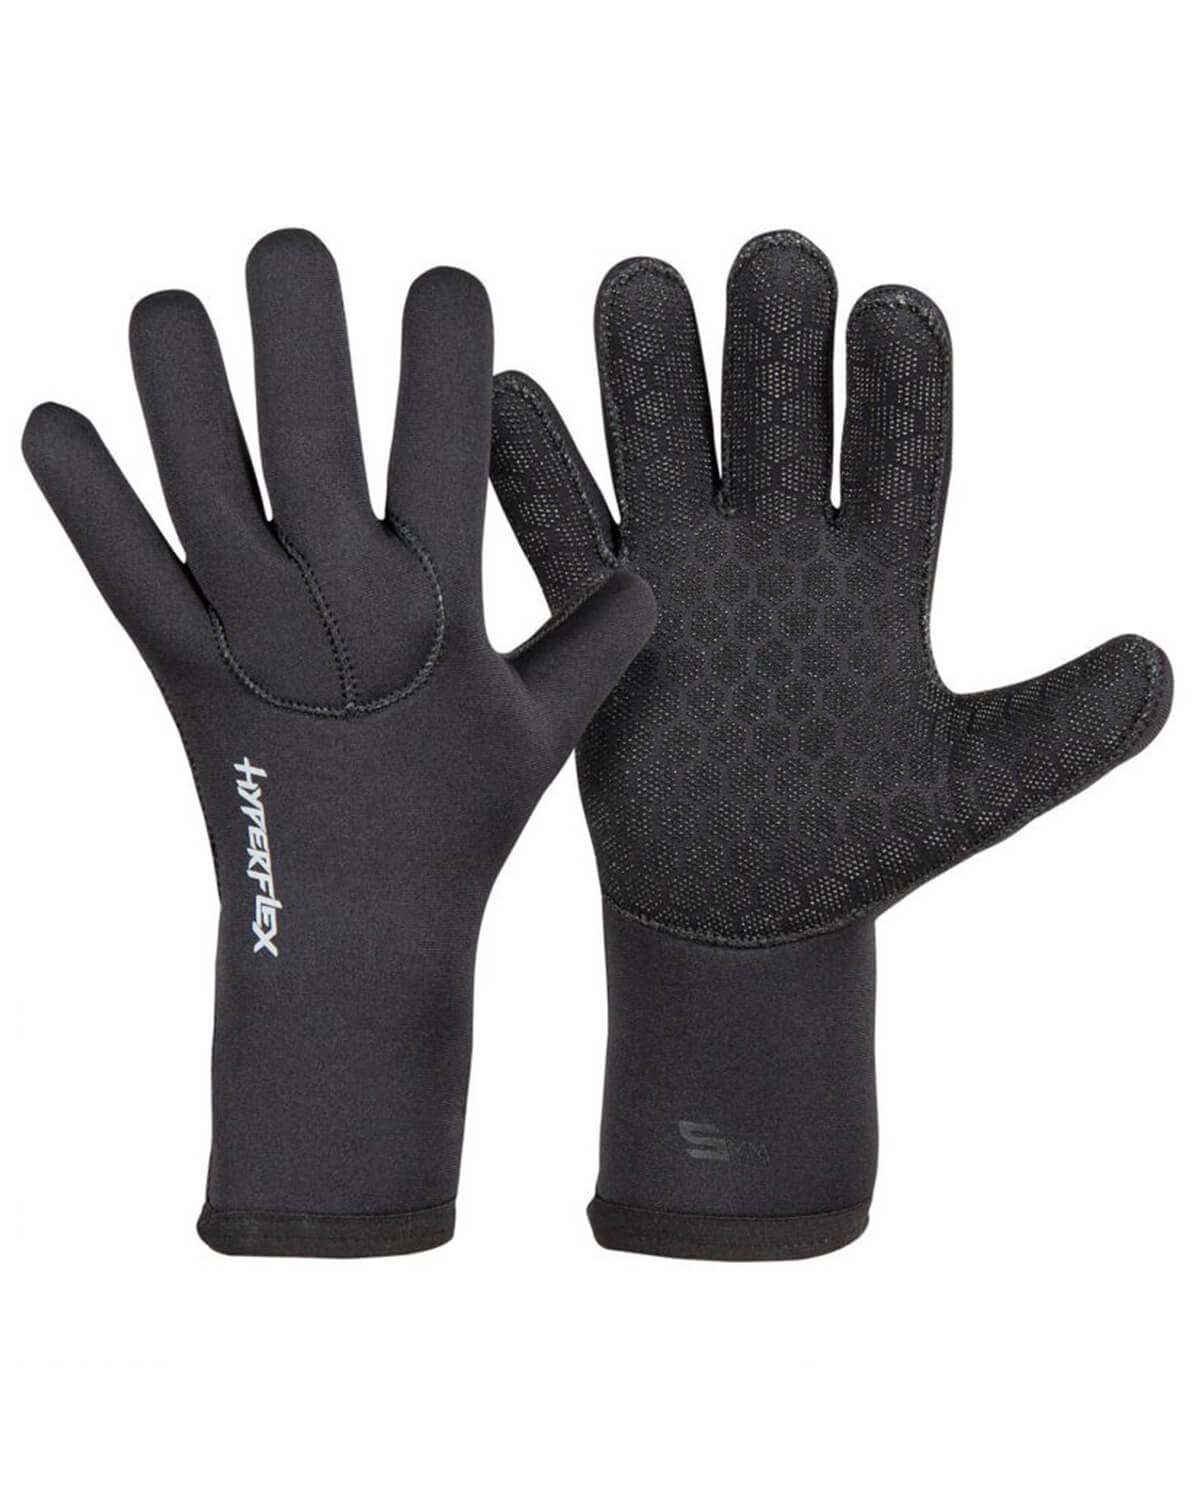 5mm HyperFlex ACCESS Wetsuit Gloves